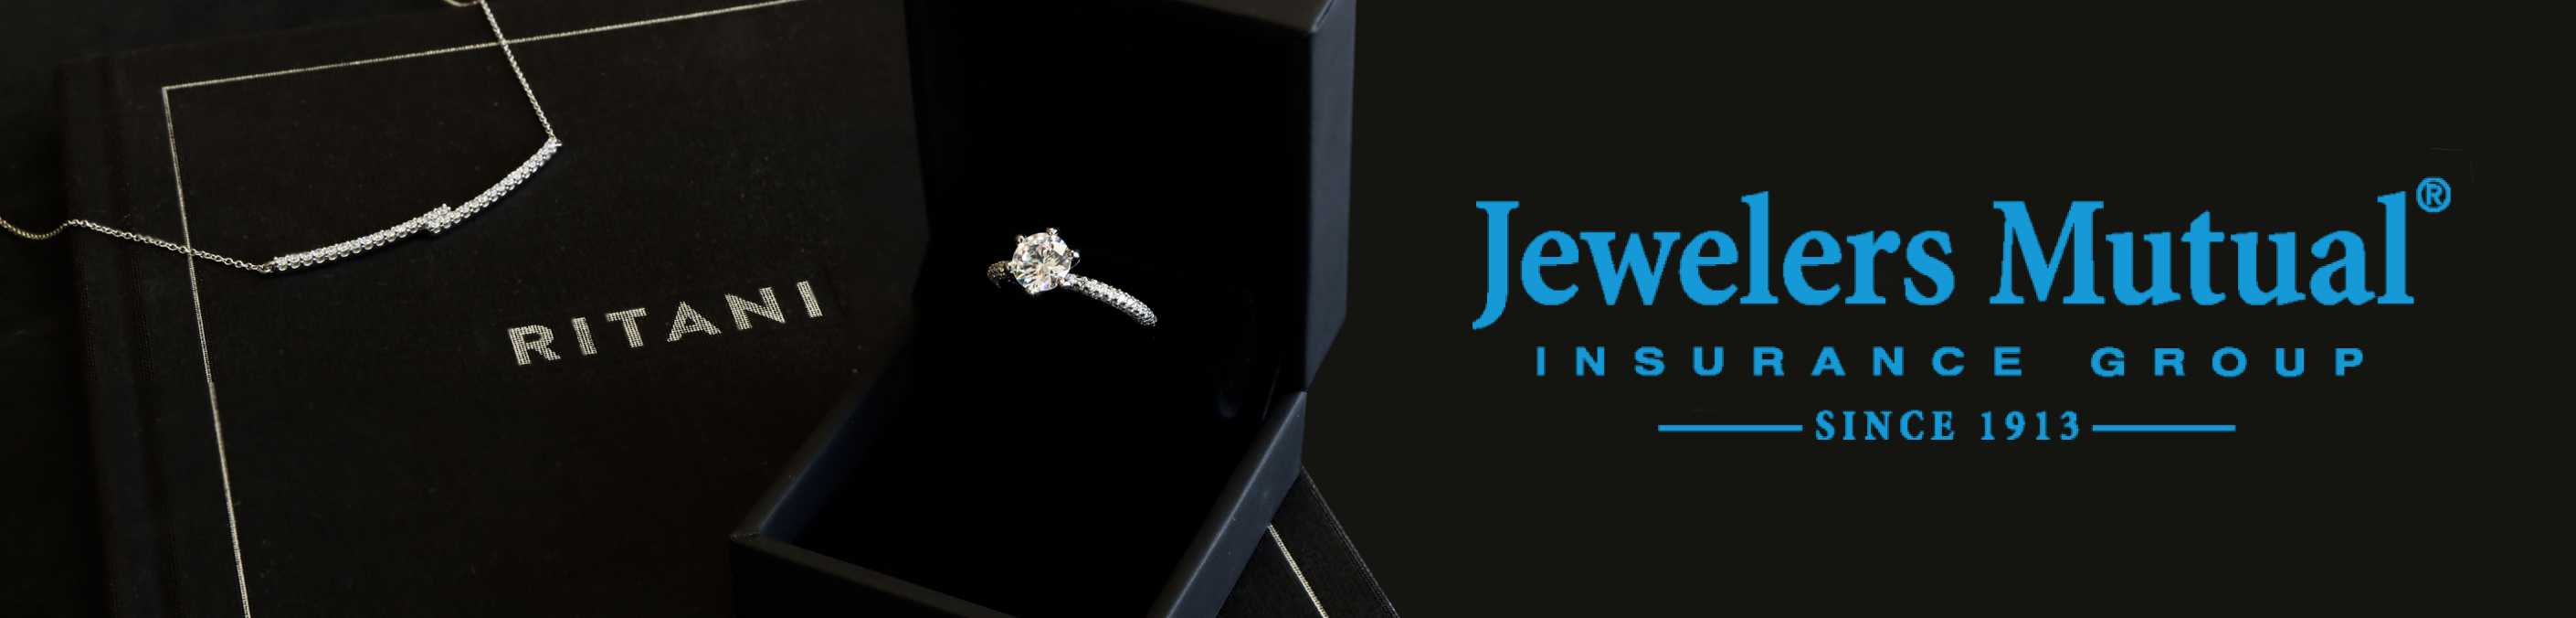 Jewelers Mutual Insurance Group and Ritani Logo